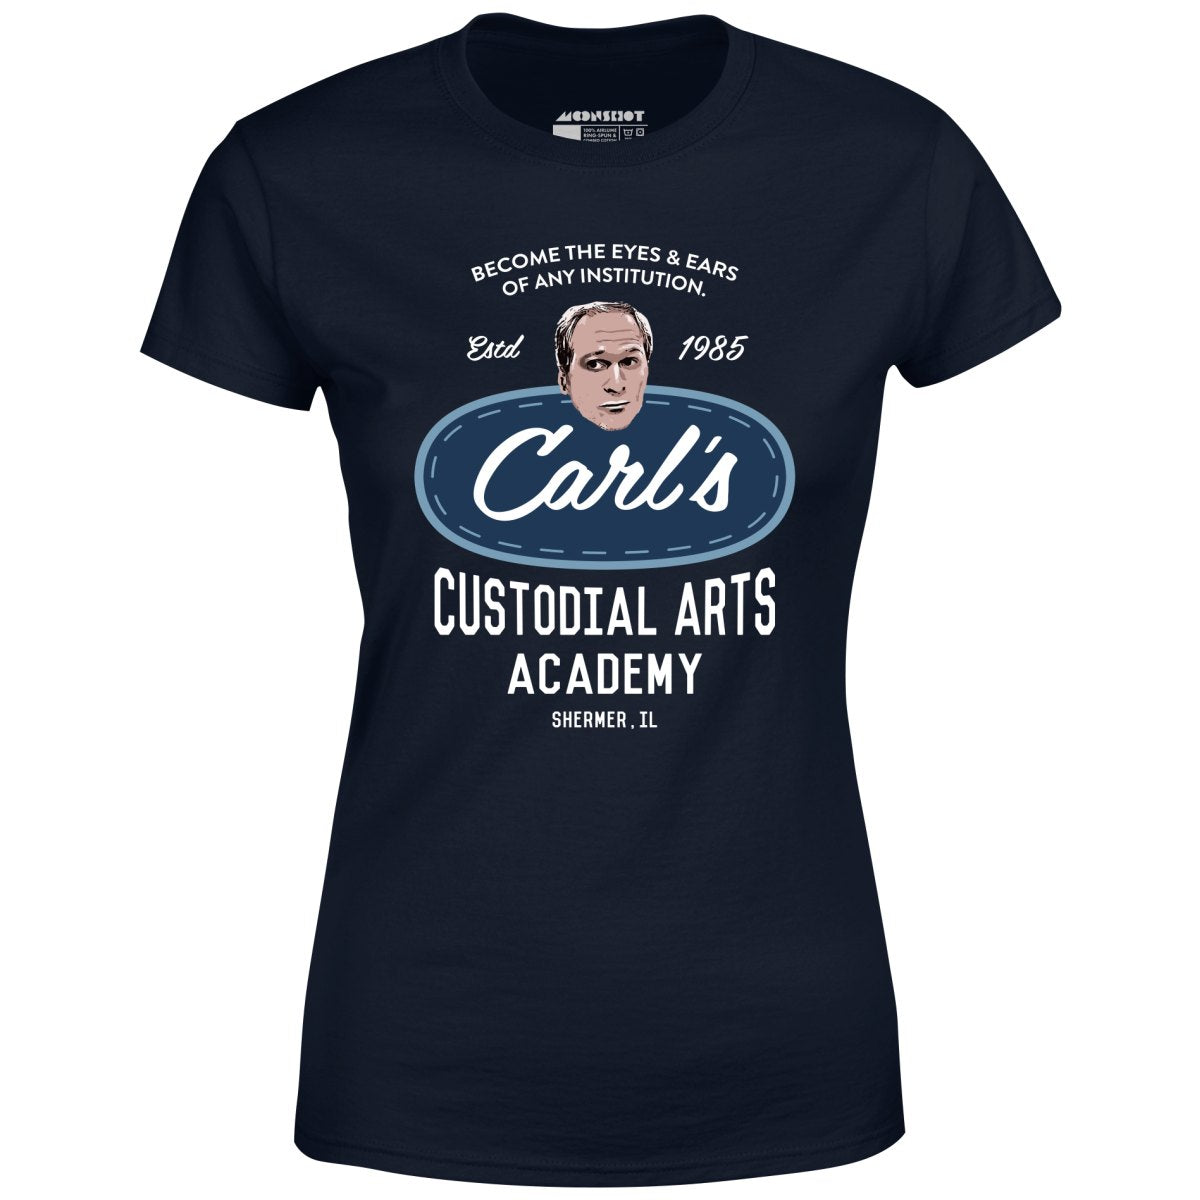 Carl's Custodial Arts Academy - Breakfast Club - Women's T-Shirt